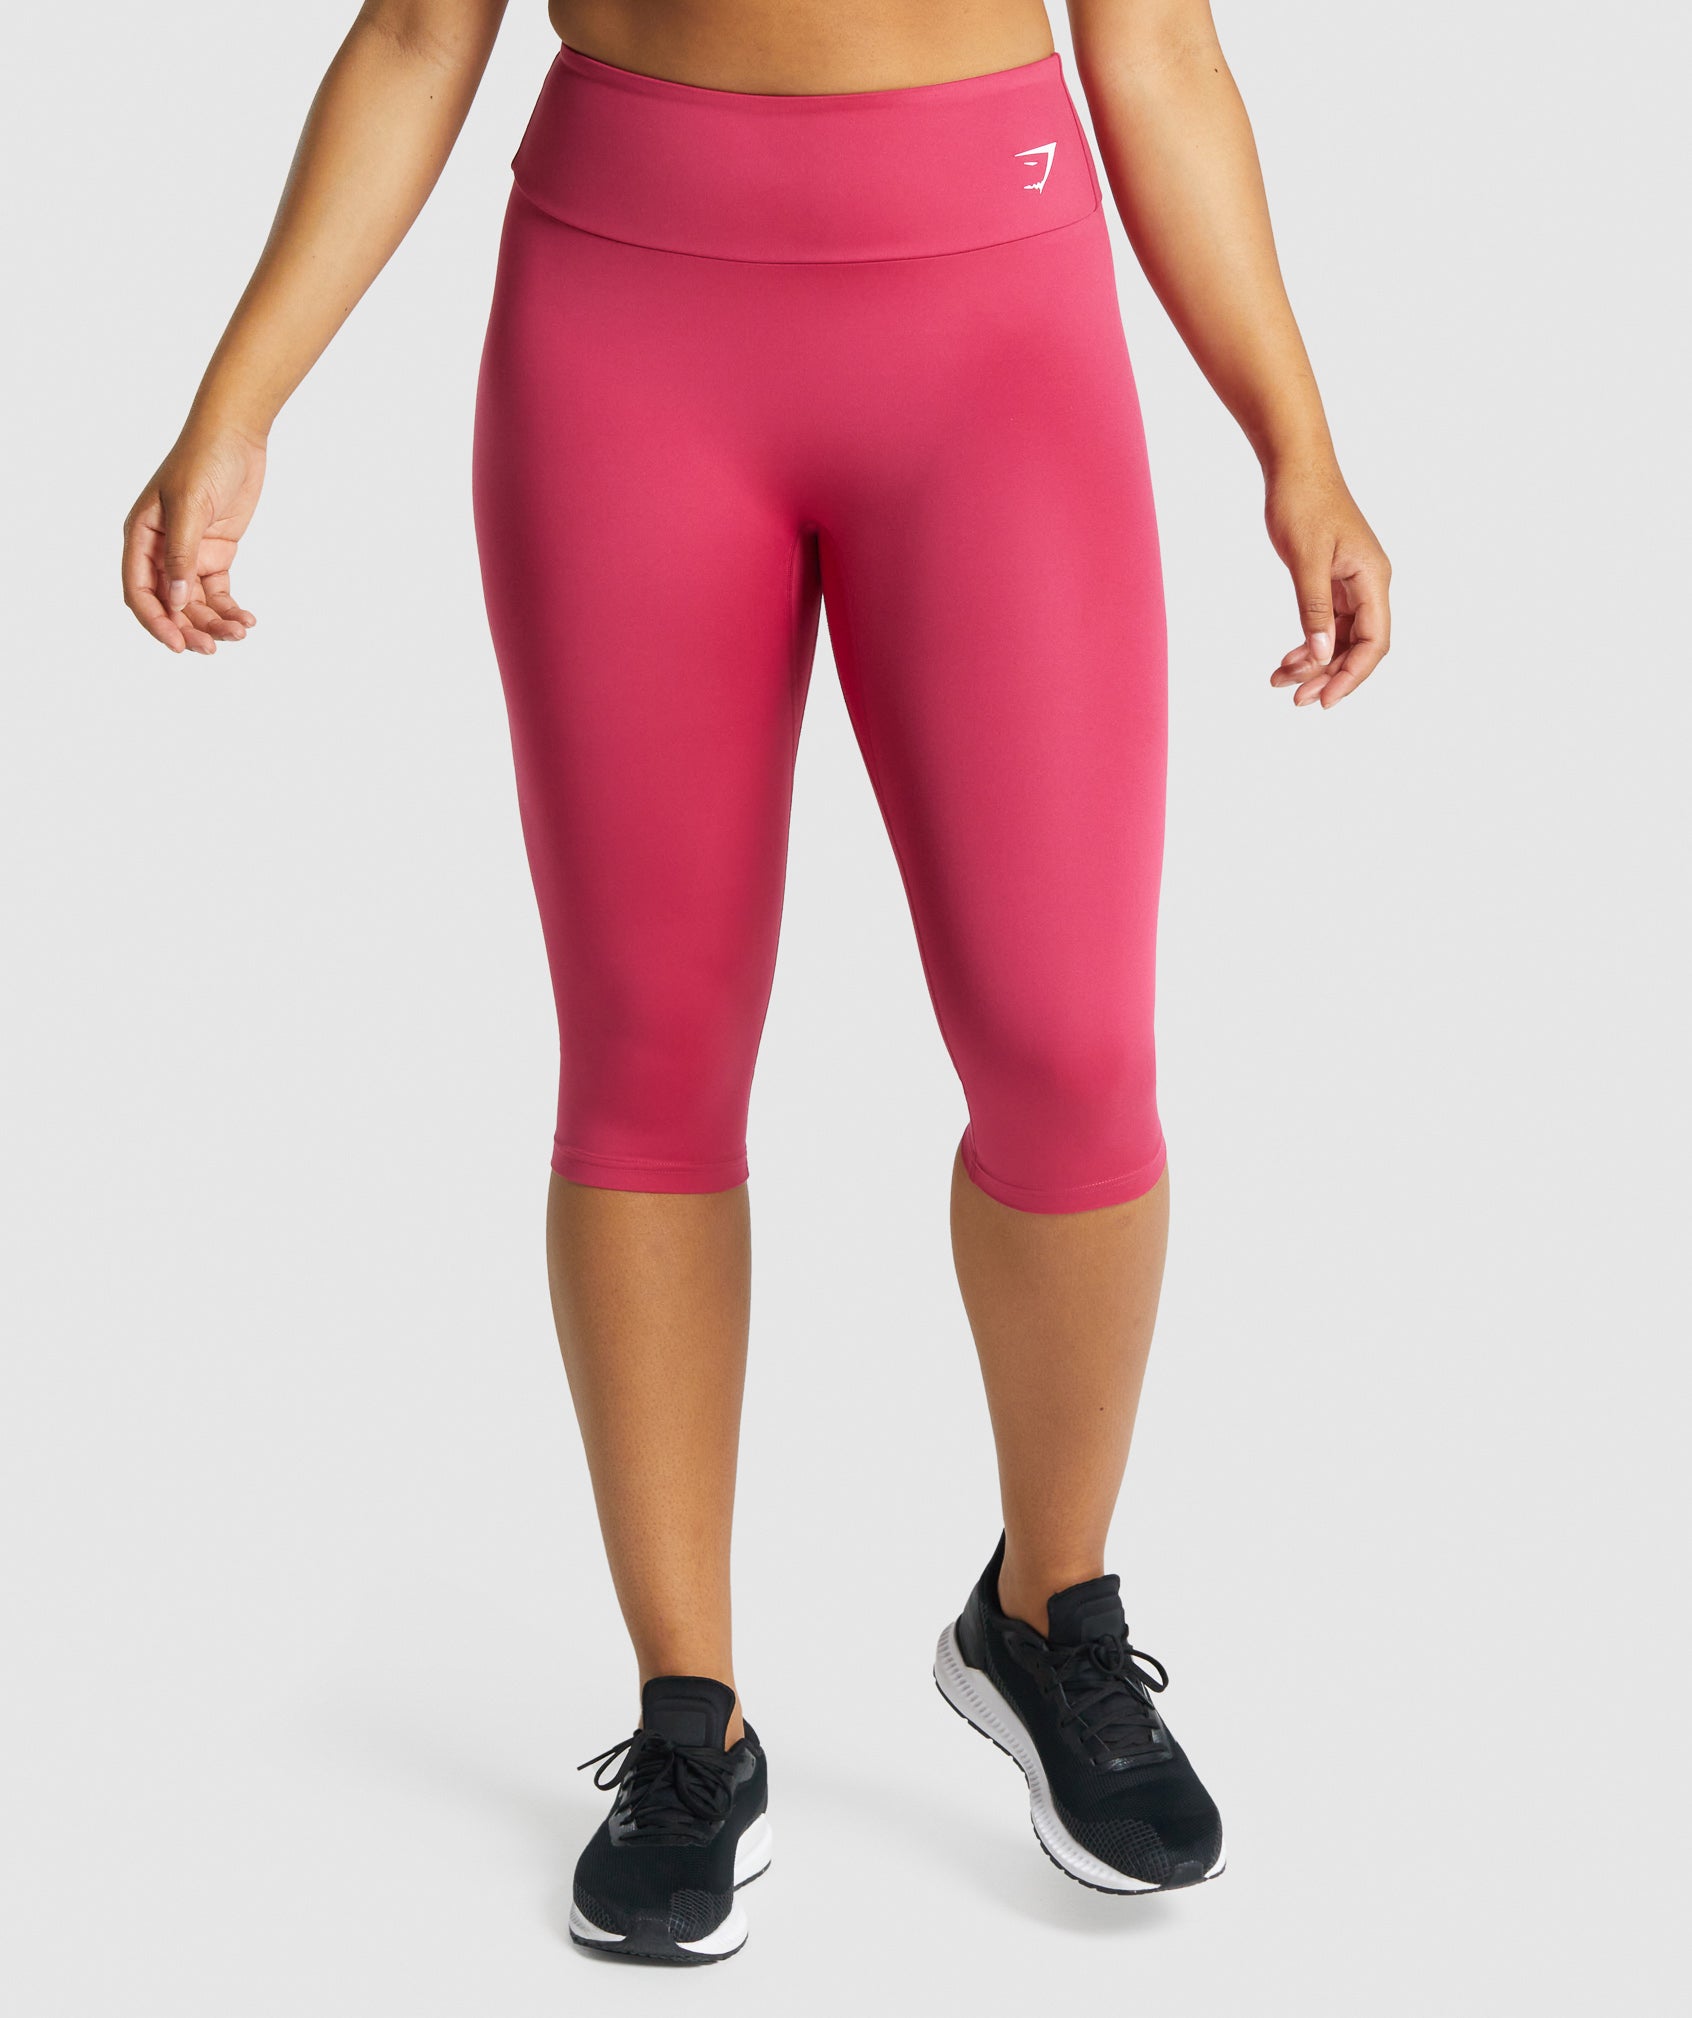 Gymshark Ultra Seamless Leggings- Neon Pink - $36 (48% Off